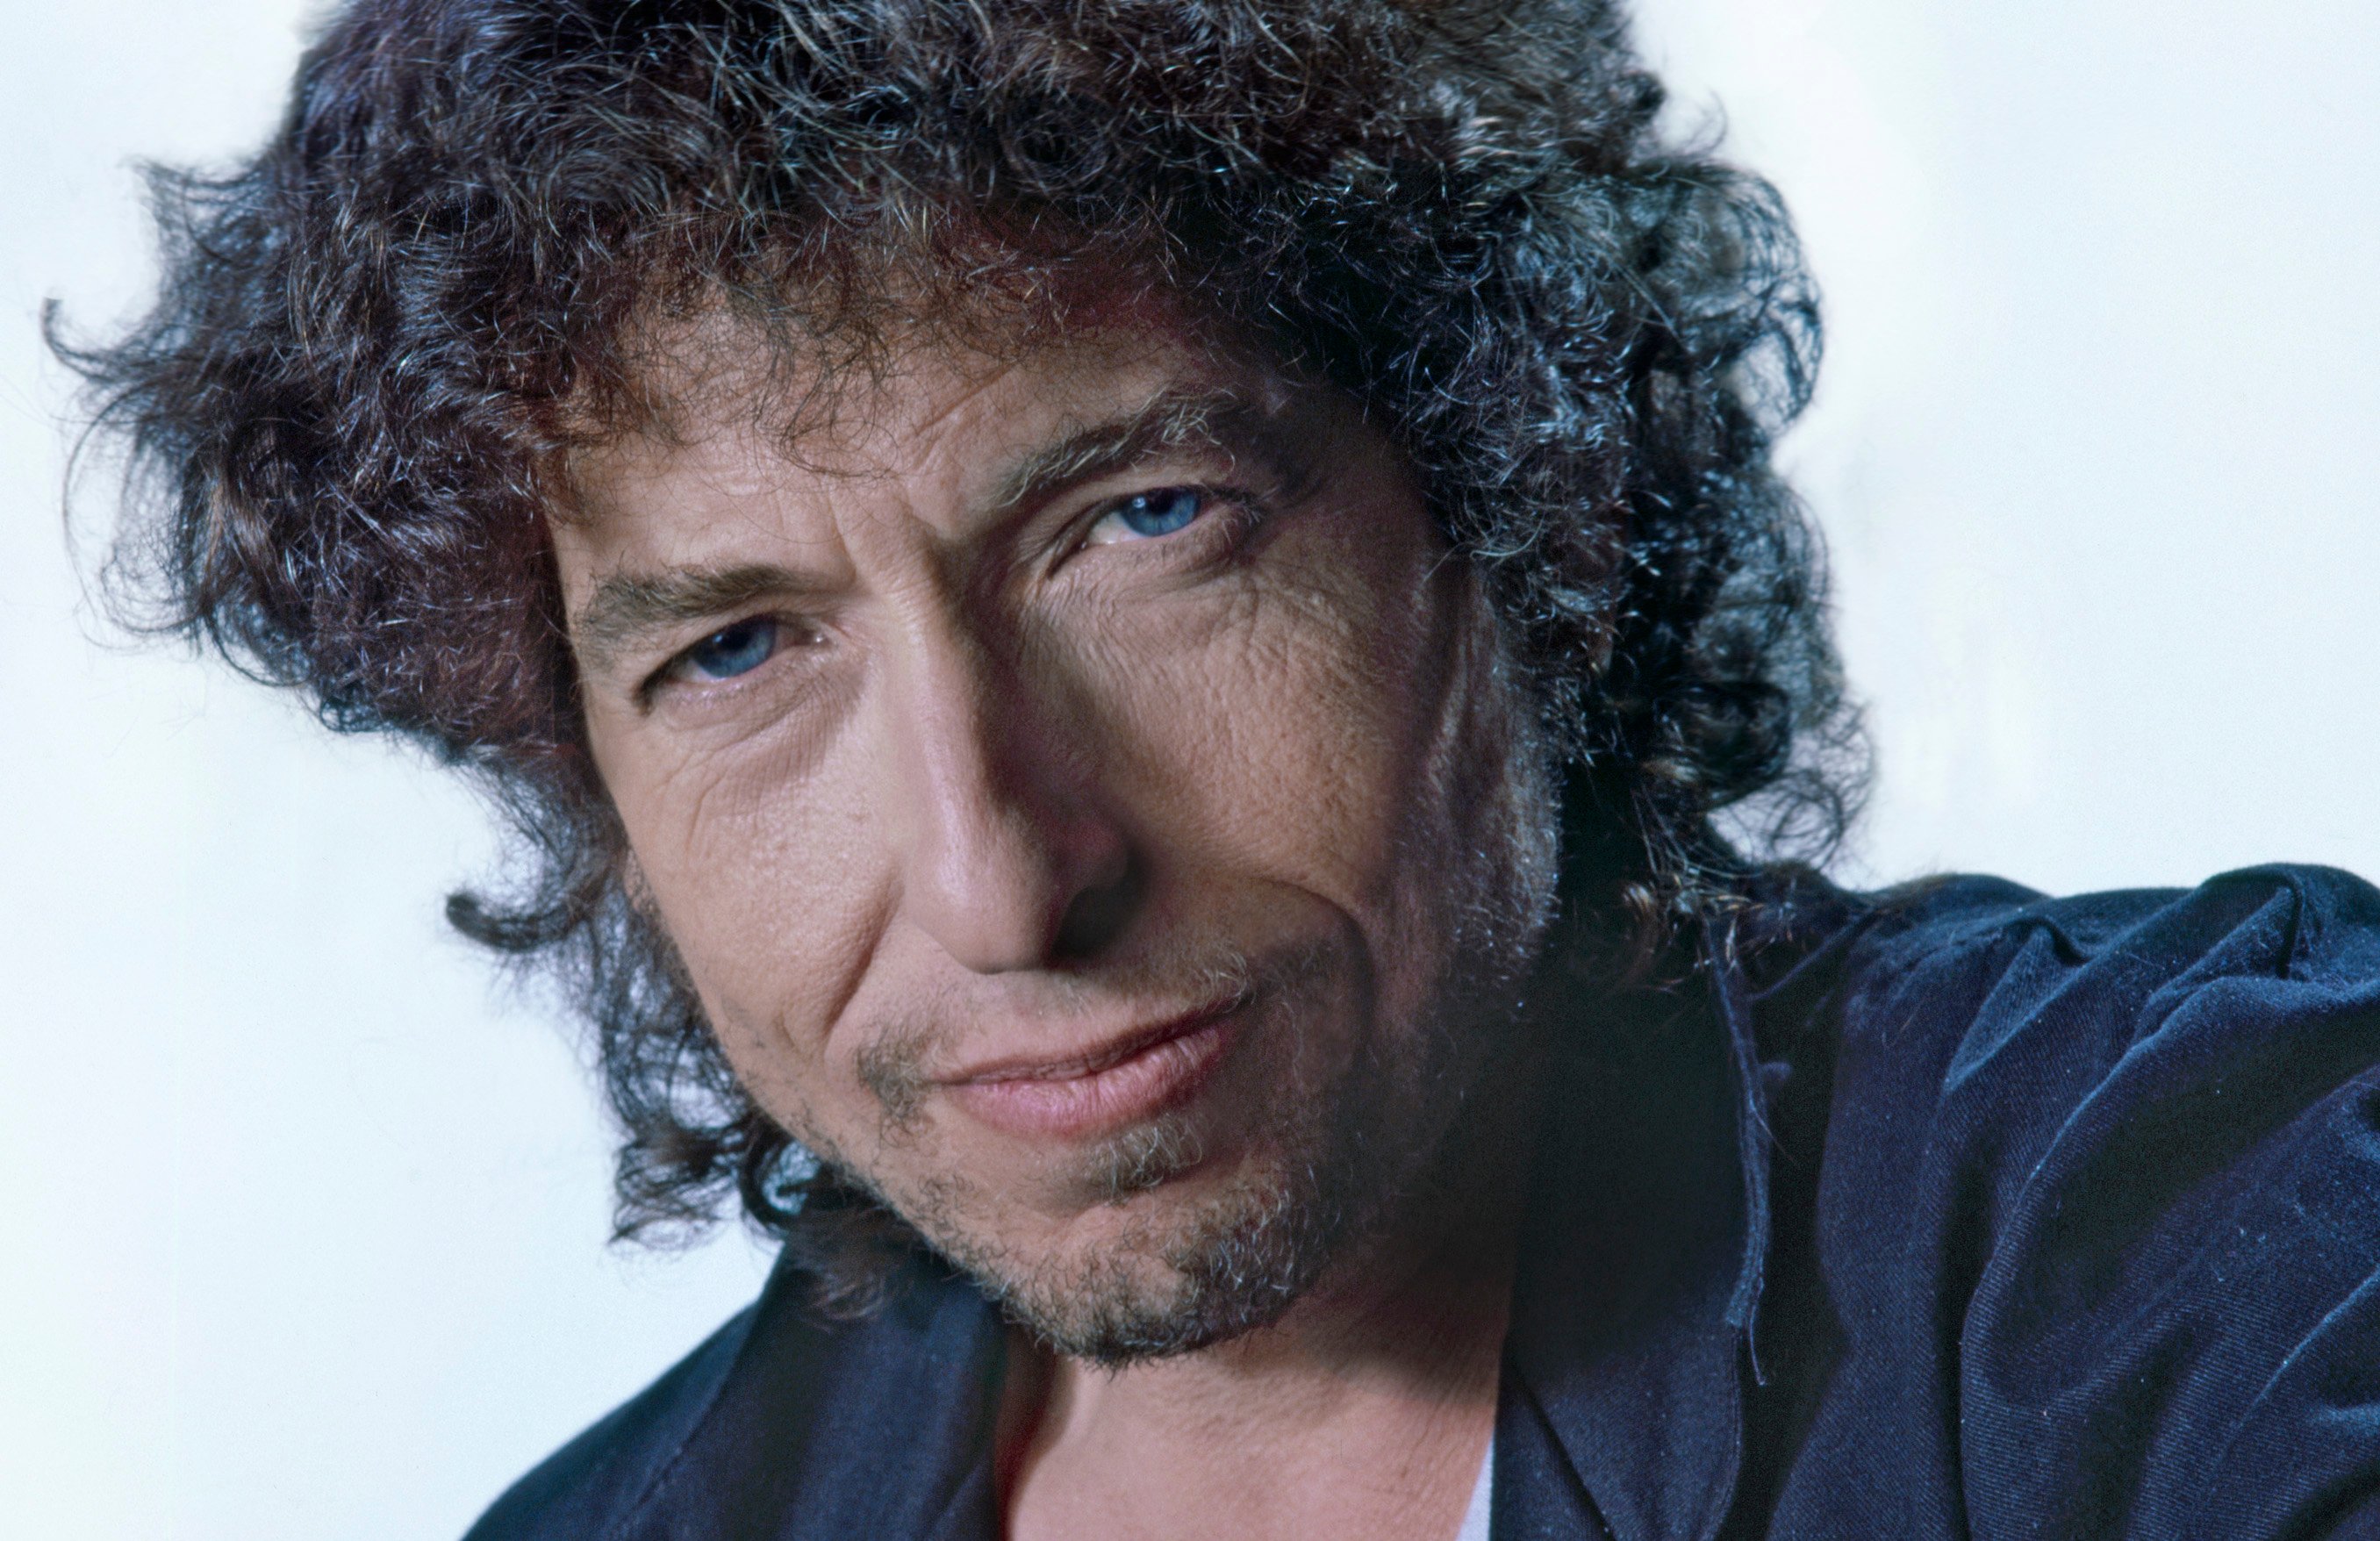 Bob Dylan wears a blue shirt.